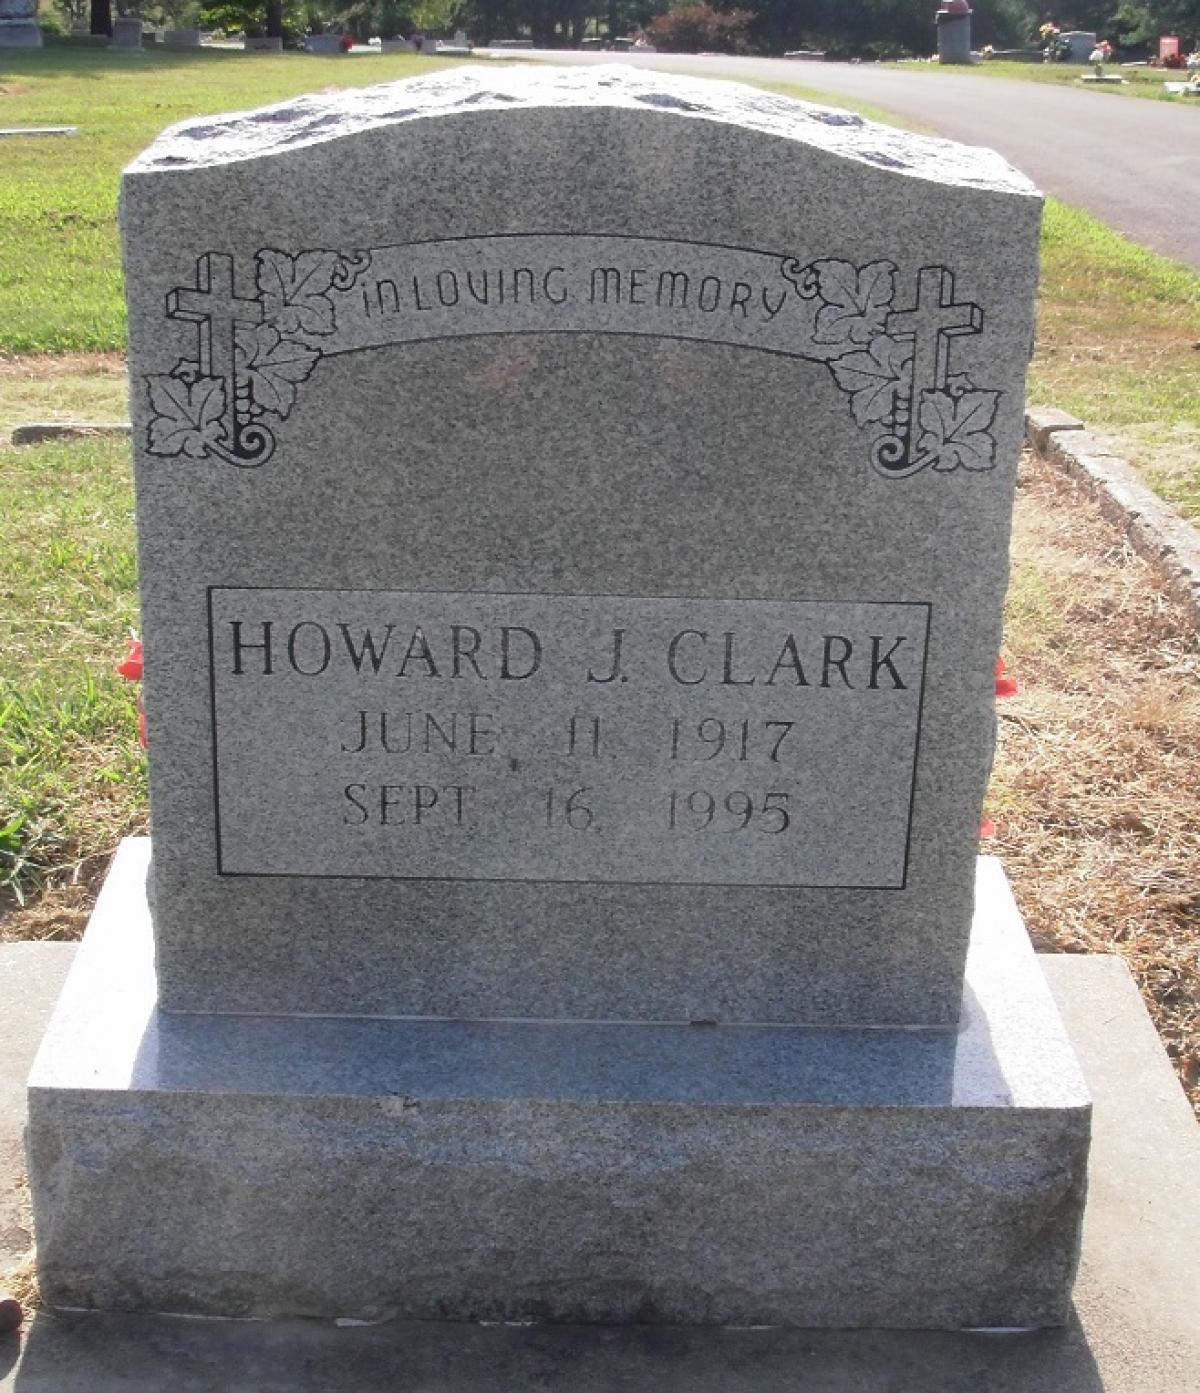 OK, Grove, Olympus Cemetery, Clark, Howard J. Headstone